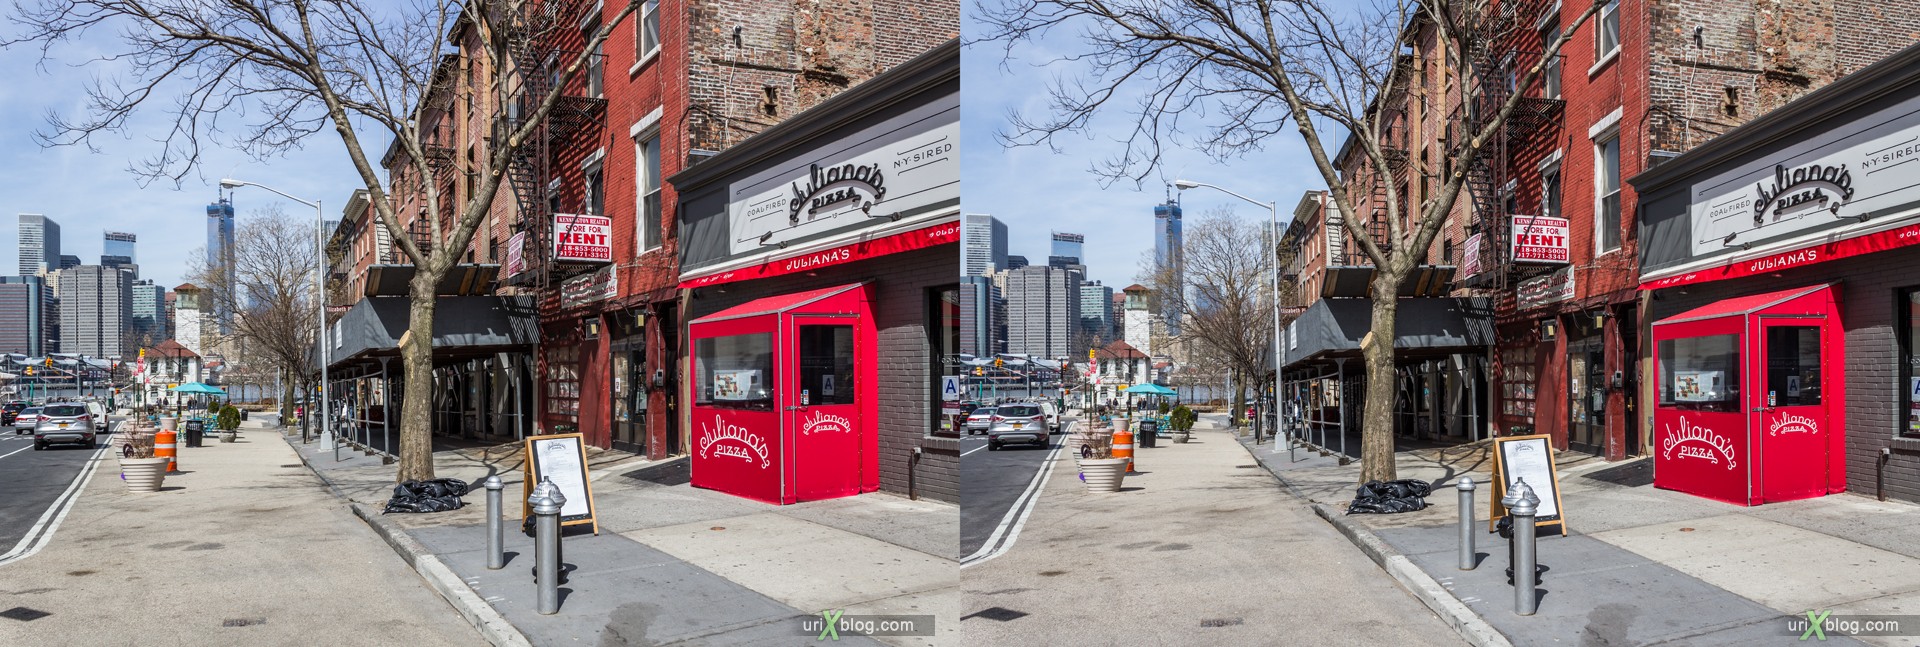 2013, Old Fulton улица, Бруклин, Нью-Йорк, США, 3D, перекрёстные стереопары, стерео, стереопара, стереопары